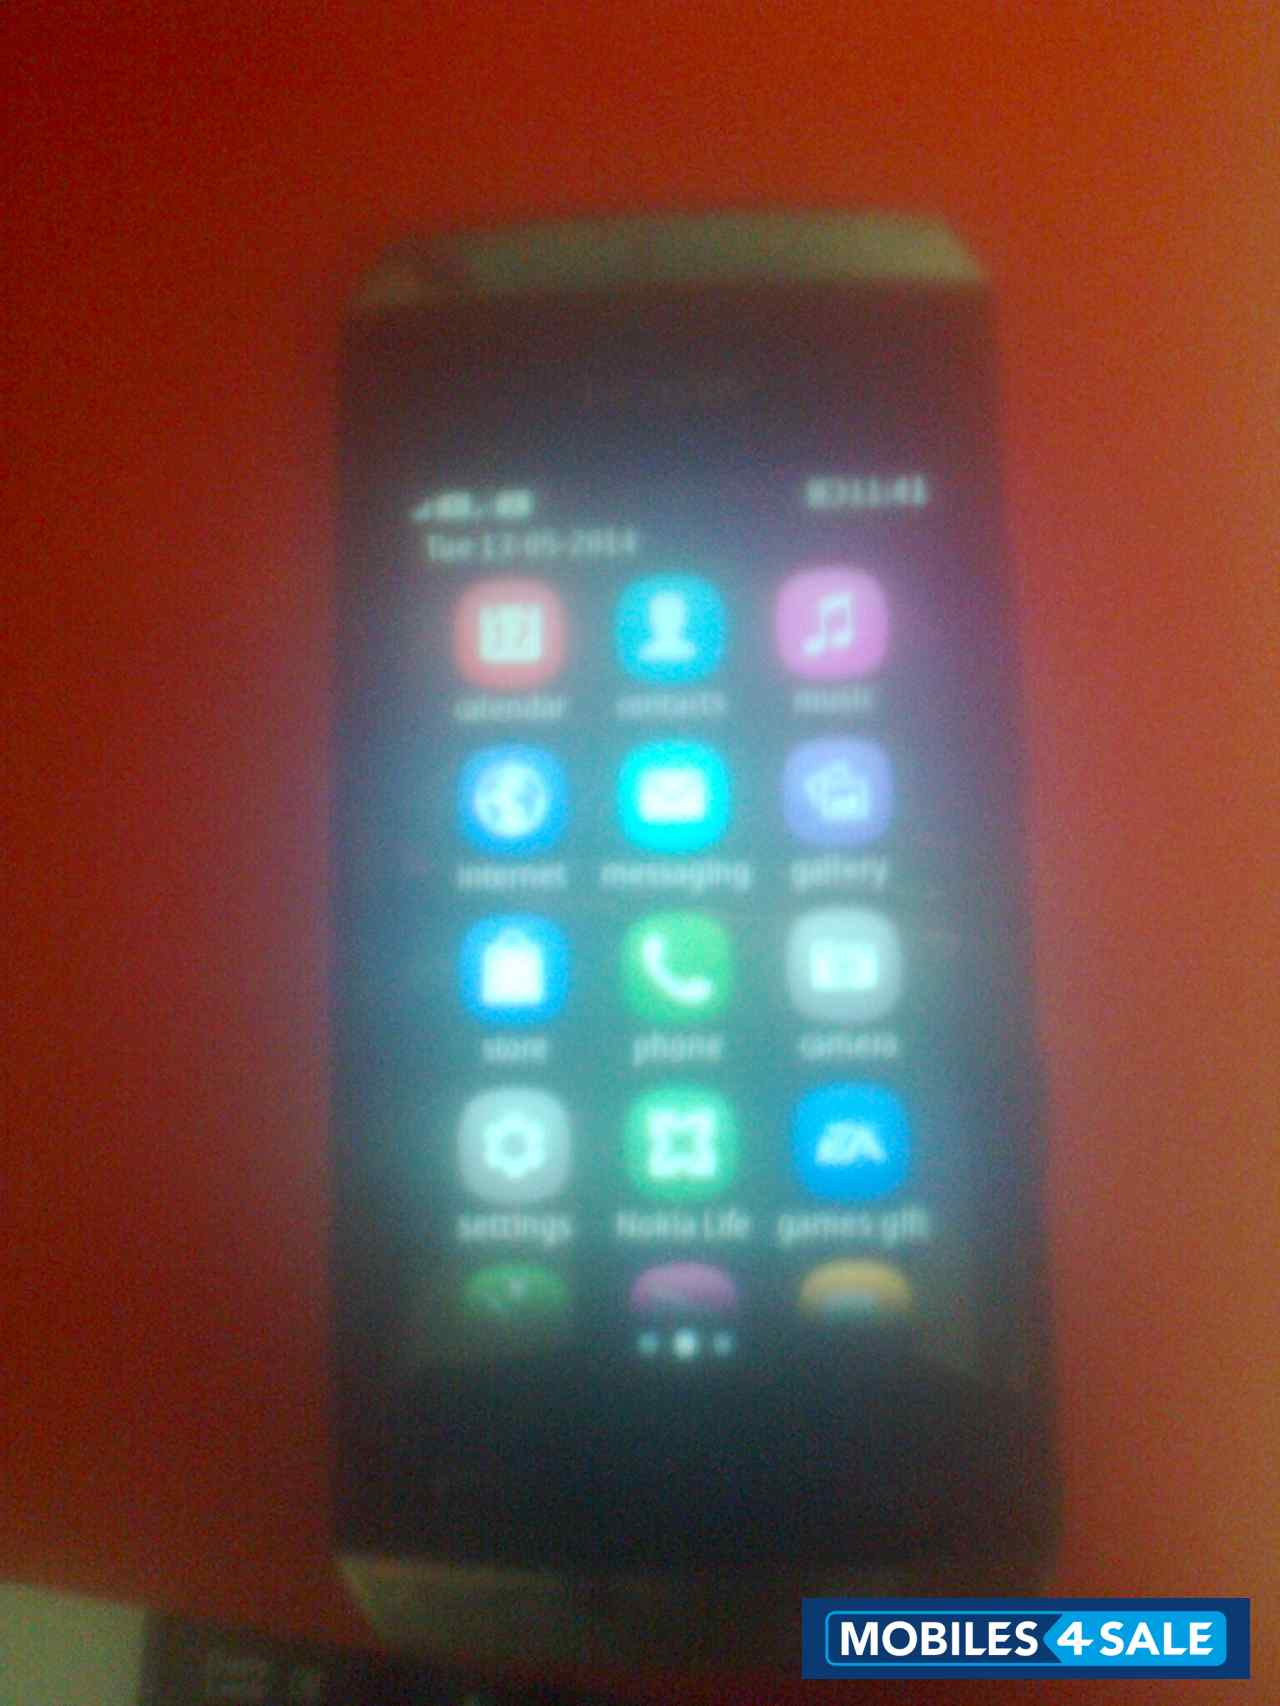 Silver Black Nokia Asha 305